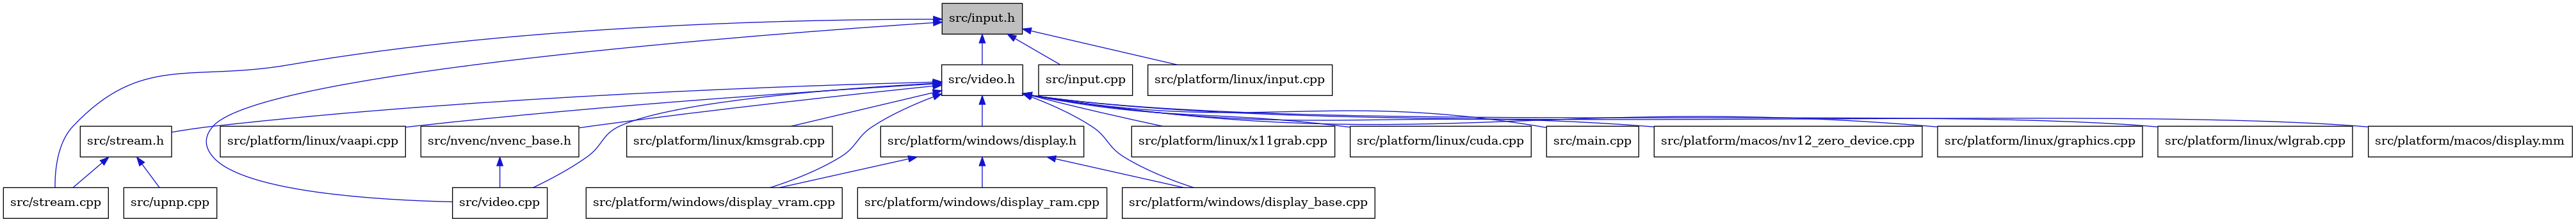 digraph {
    graph [bgcolor="#00000000"]
    node [shape=rectangle style=filled fillcolor="#FFFFFF" font=Helvetica padding=2]
    edge [color="#1414CE"]
    "4" [label="src/stream.cpp" tooltip="src/stream.cpp"]
    "12" [label="src/platform/linux/vaapi.cpp" tooltip="src/platform/linux/vaapi.cpp"]
    "7" [label="src/nvenc/nvenc_base.h" tooltip="src/nvenc/nvenc_base.h"]
    "11" [label="src/platform/linux/kmsgrab.cpp" tooltip="src/platform/linux/kmsgrab.cpp"]
    "17" [label="src/platform/windows/display.h" tooltip="src/platform/windows/display.h"]
    "22" [label="src/upnp.cpp" tooltip="src/upnp.cpp"]
    "5" [label="src/video.h" tooltip="src/video.h"]
    "2" [label="src/input.cpp" tooltip="src/input.cpp"]
    "3" [label="src/platform/linux/input.cpp" tooltip="src/platform/linux/input.cpp"]
    "20" [label="src/platform/windows/display_vram.cpp" tooltip="src/platform/windows/display_vram.cpp"]
    "14" [label="src/platform/linux/x11grab.cpp" tooltip="src/platform/linux/x11grab.cpp"]
    "1" [label="src/input.h" tooltip="src/input.h" fillcolor="#BFBFBF"]
    "19" [label="src/platform/windows/display_base.cpp" tooltip="src/platform/windows/display_base.cpp"]
    "18" [label="src/platform/windows/display_ram.cpp" tooltip="src/platform/windows/display_ram.cpp"]
    "10" [label="src/platform/linux/cuda.cpp" tooltip="src/platform/linux/cuda.cpp"]
    "6" [label="src/main.cpp" tooltip="src/main.cpp"]
    "21" [label="src/stream.h" tooltip="src/stream.h"]
    "8" [label="src/video.cpp" tooltip="src/video.cpp"]
    "16" [label="src/platform/macos/nv12_zero_device.cpp" tooltip="src/platform/macos/nv12_zero_device.cpp"]
    "9" [label="src/platform/linux/graphics.cpp" tooltip="src/platform/linux/graphics.cpp"]
    "13" [label="src/platform/linux/wlgrab.cpp" tooltip="src/platform/linux/wlgrab.cpp"]
    "15" [label="src/platform/macos/display.mm" tooltip="src/platform/macos/display.mm"]
    "7" -> "8" [dir=back tooltip="include"]
    "17" -> "18" [dir=back tooltip="include"]
    "17" -> "19" [dir=back tooltip="include"]
    "17" -> "20" [dir=back tooltip="include"]
    "5" -> "6" [dir=back tooltip="include"]
    "5" -> "7" [dir=back tooltip="include"]
    "5" -> "9" [dir=back tooltip="include"]
    "5" -> "10" [dir=back tooltip="include"]
    "5" -> "11" [dir=back tooltip="include"]
    "5" -> "12" [dir=back tooltip="include"]
    "5" -> "13" [dir=back tooltip="include"]
    "5" -> "14" [dir=back tooltip="include"]
    "5" -> "15" [dir=back tooltip="include"]
    "5" -> "16" [dir=back tooltip="include"]
    "5" -> "17" [dir=back tooltip="include"]
    "5" -> "19" [dir=back tooltip="include"]
    "5" -> "20" [dir=back tooltip="include"]
    "5" -> "21" [dir=back tooltip="include"]
    "5" -> "8" [dir=back tooltip="include"]
    "1" -> "2" [dir=back tooltip="include"]
    "1" -> "3" [dir=back tooltip="include"]
    "1" -> "4" [dir=back tooltip="include"]
    "1" -> "5" [dir=back tooltip="include"]
    "1" -> "8" [dir=back tooltip="include"]
    "21" -> "4" [dir=back tooltip="include"]
    "21" -> "22" [dir=back tooltip="include"]
}